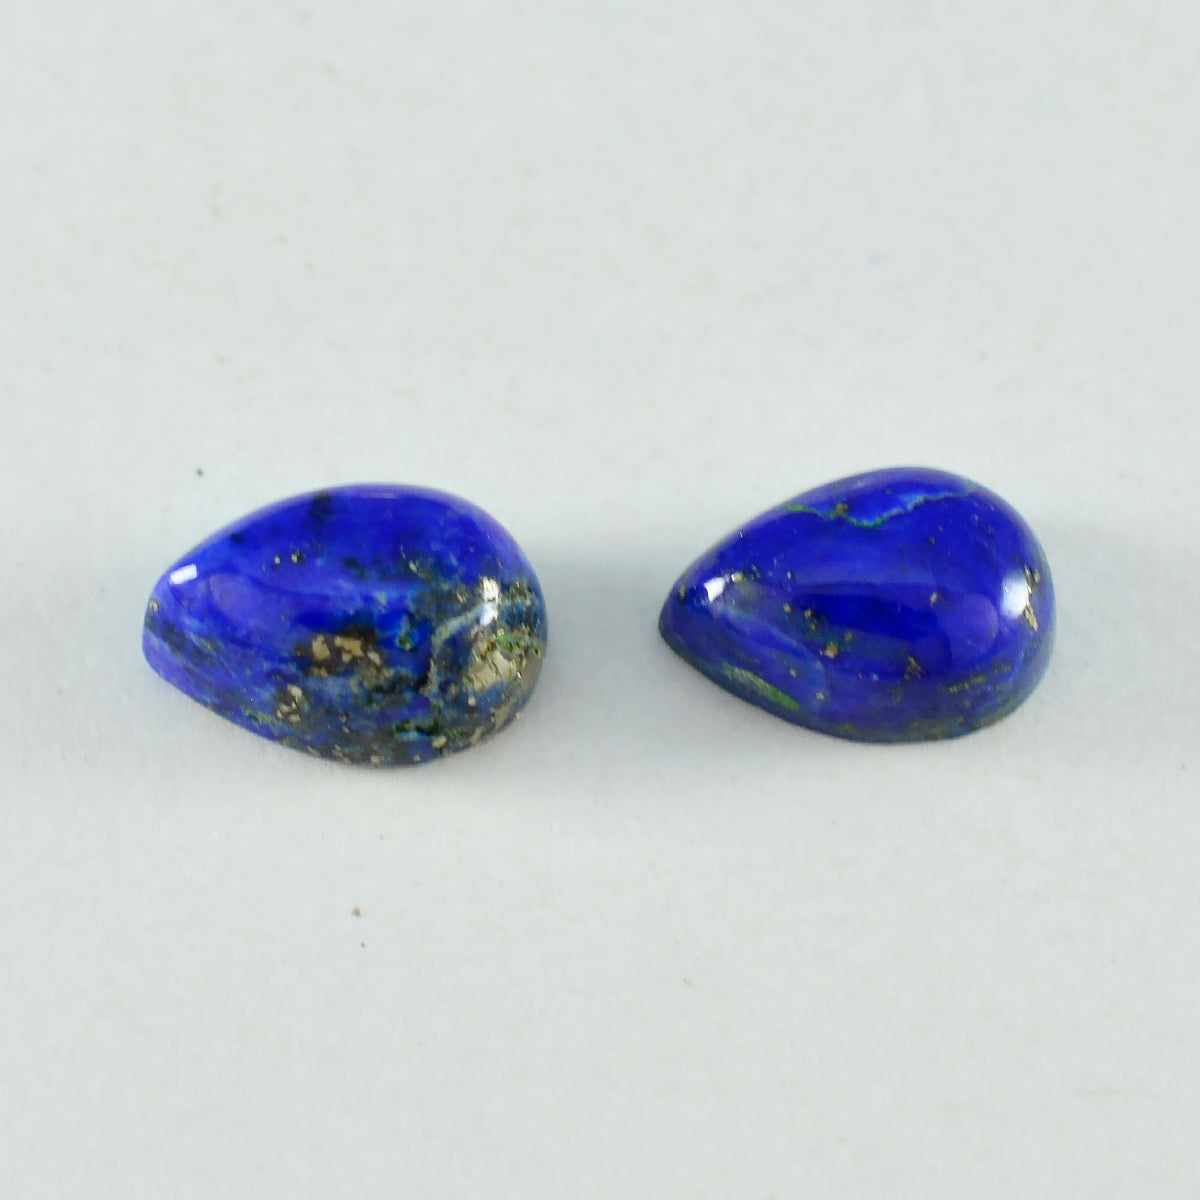 Riyogems 1PC Blue Lapis Lazuli Cabochon 6x9 mm Pear Shape A1 Quality Loose Gems